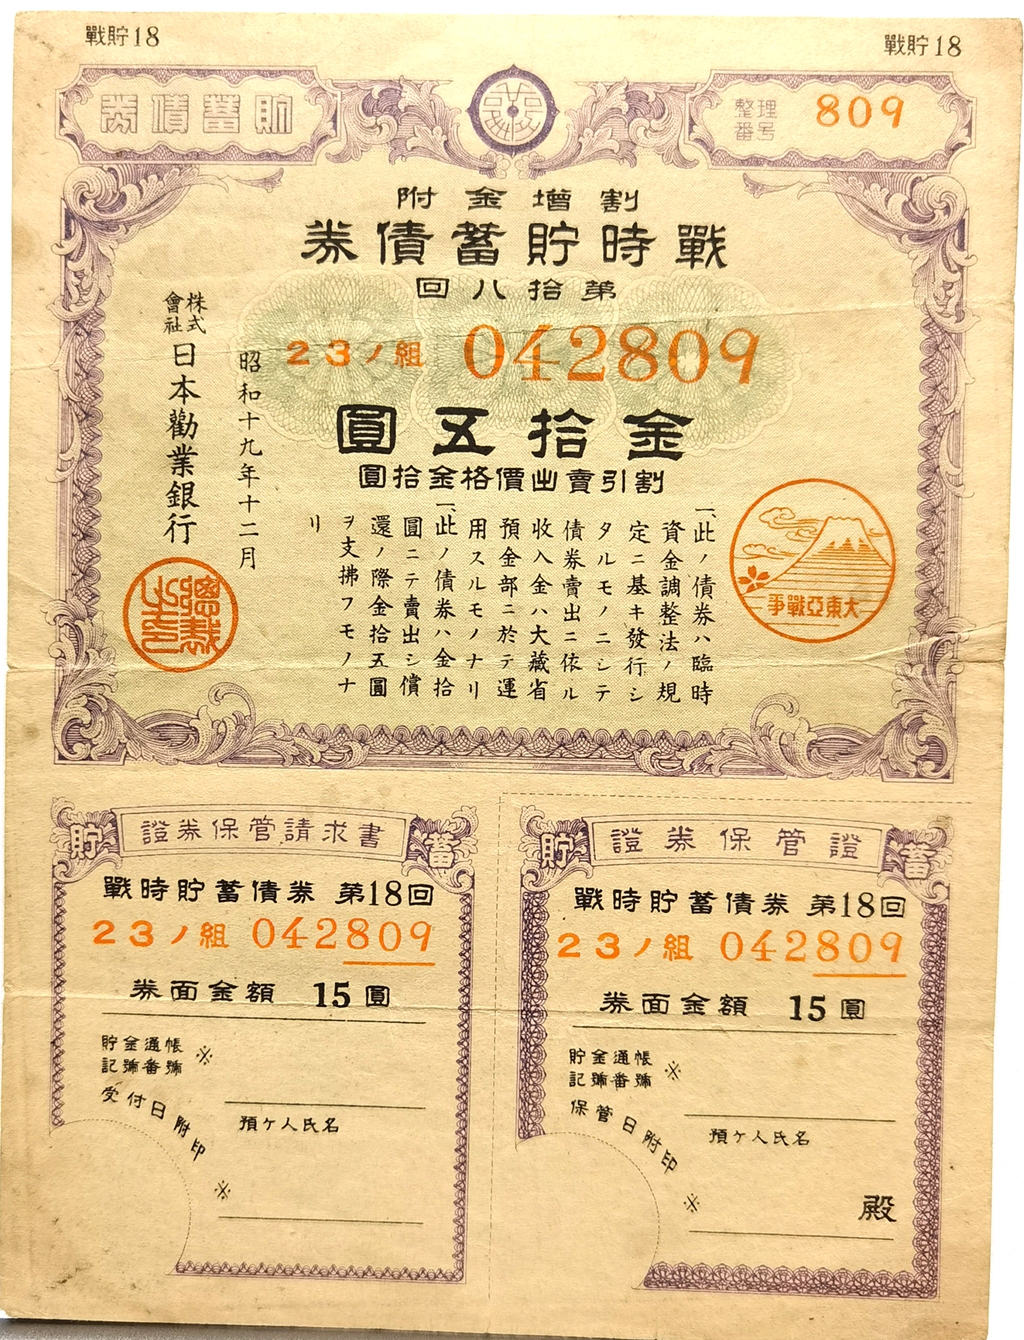 B4506, Japan War Saving Bond, 50 Yen, China Puppet Government, 1944 WWII